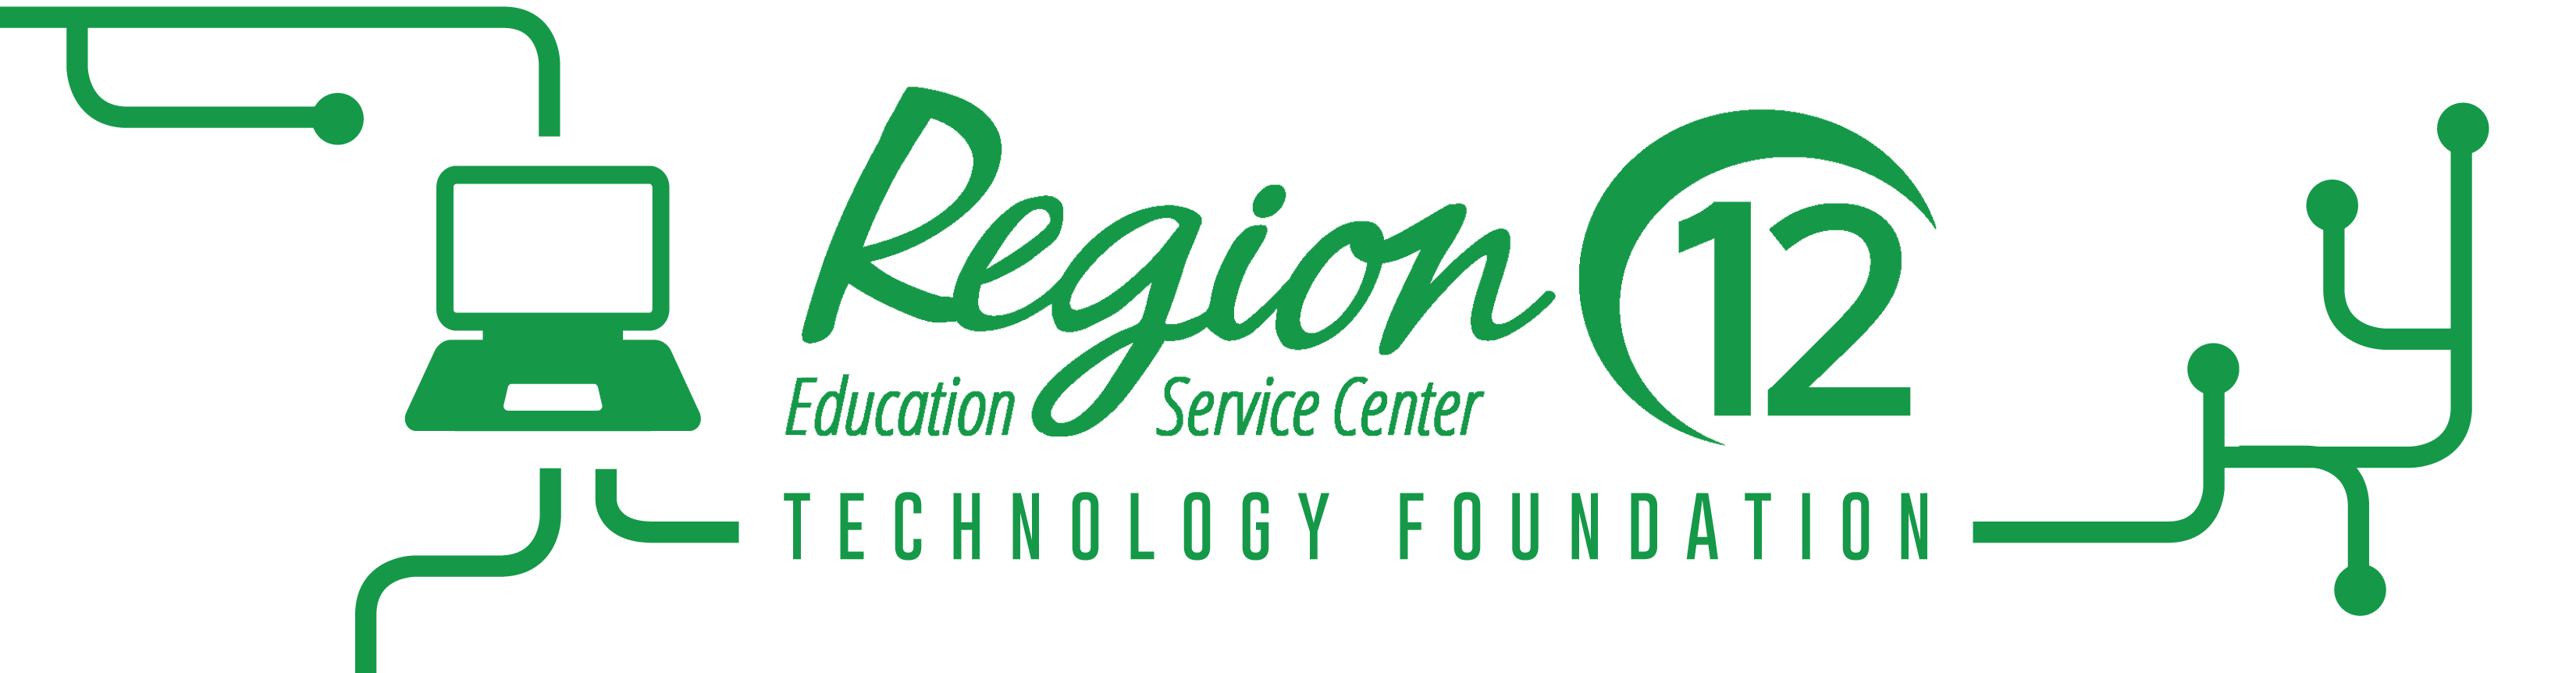 ESC Region 12 Technology Foundation Logo - Green